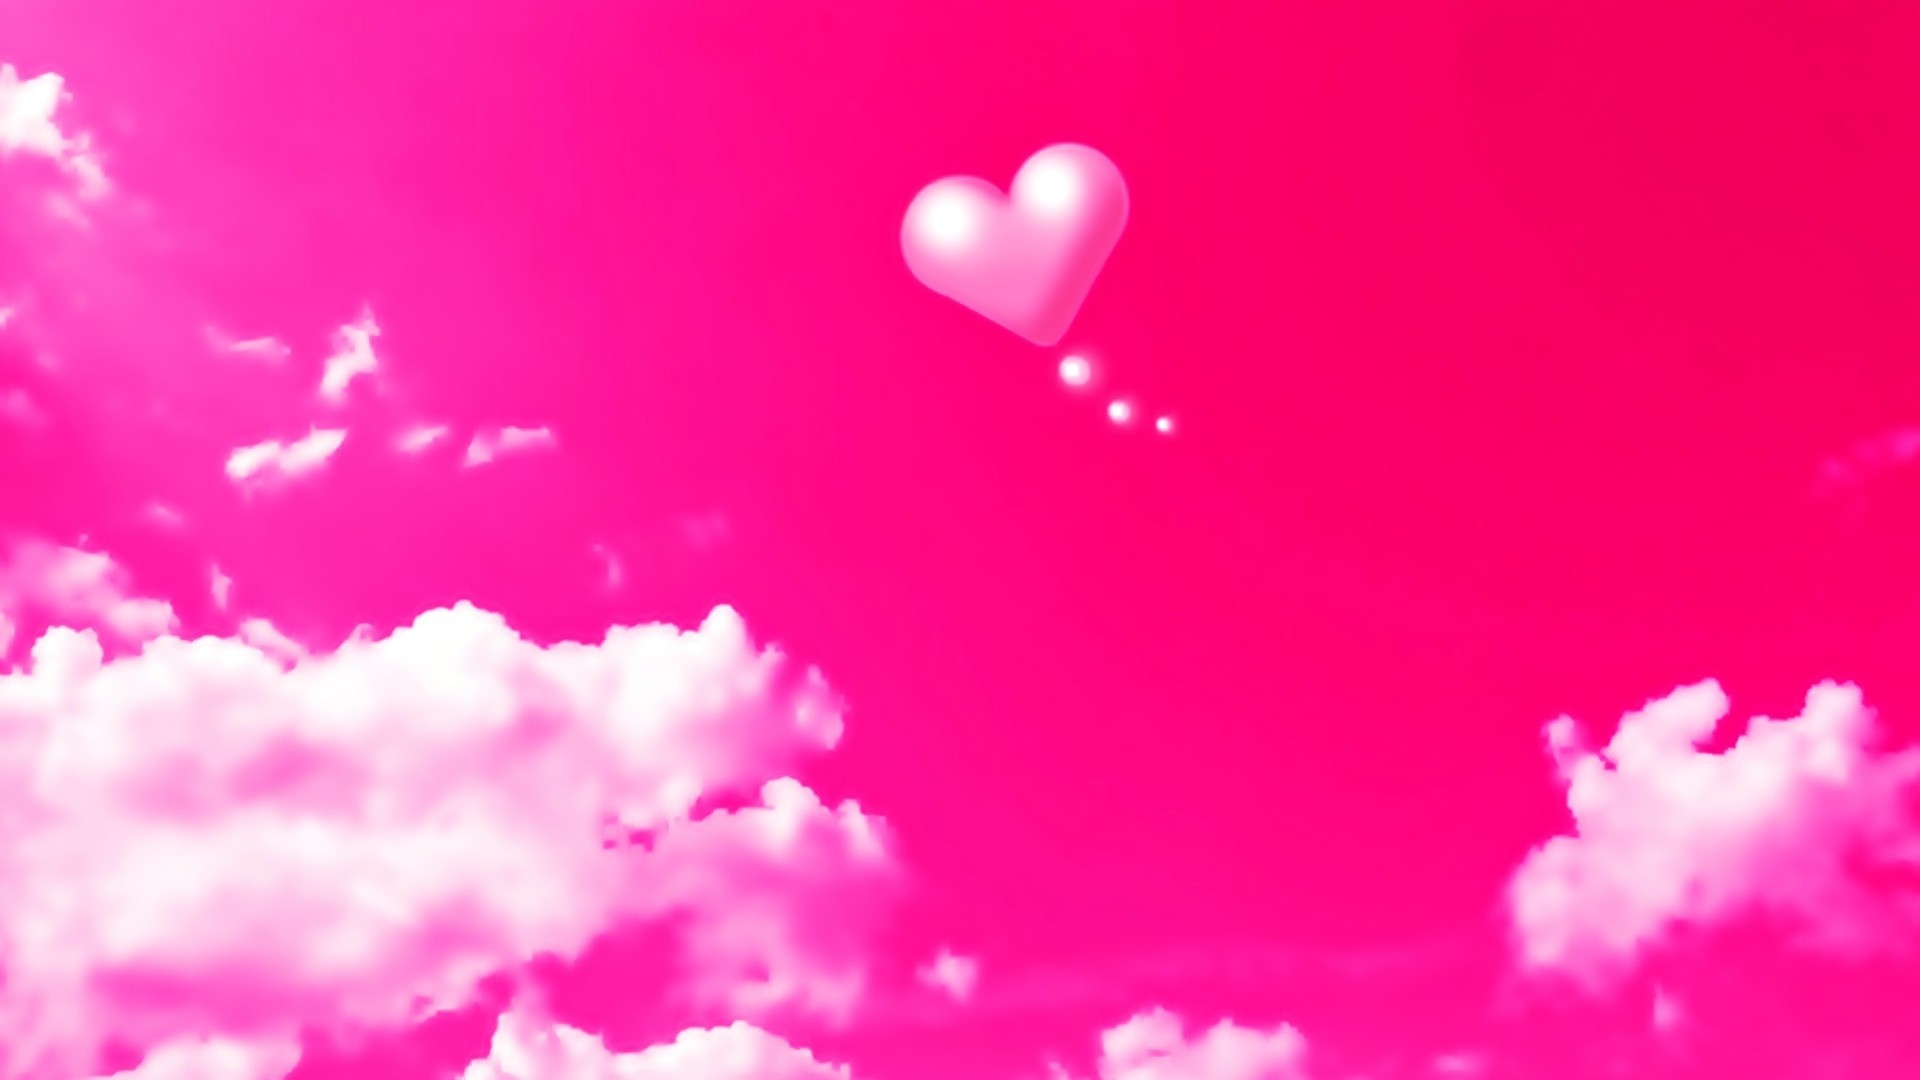 1920x1080 Download now full hd wallpaper pink heart cloud ...